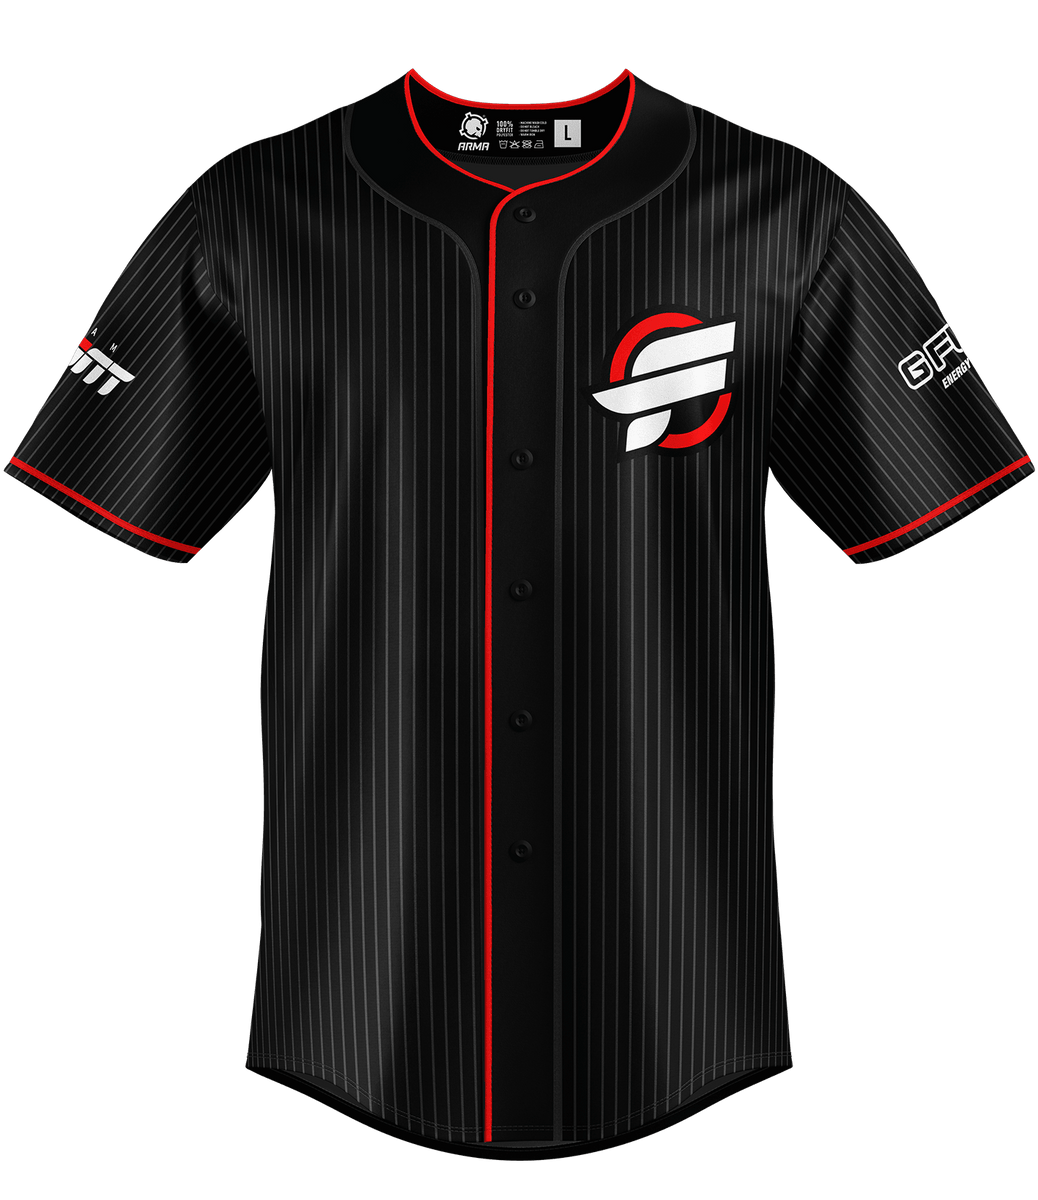 Nemesis Baseball Jersey - Custom Esports Jersey by ARMA